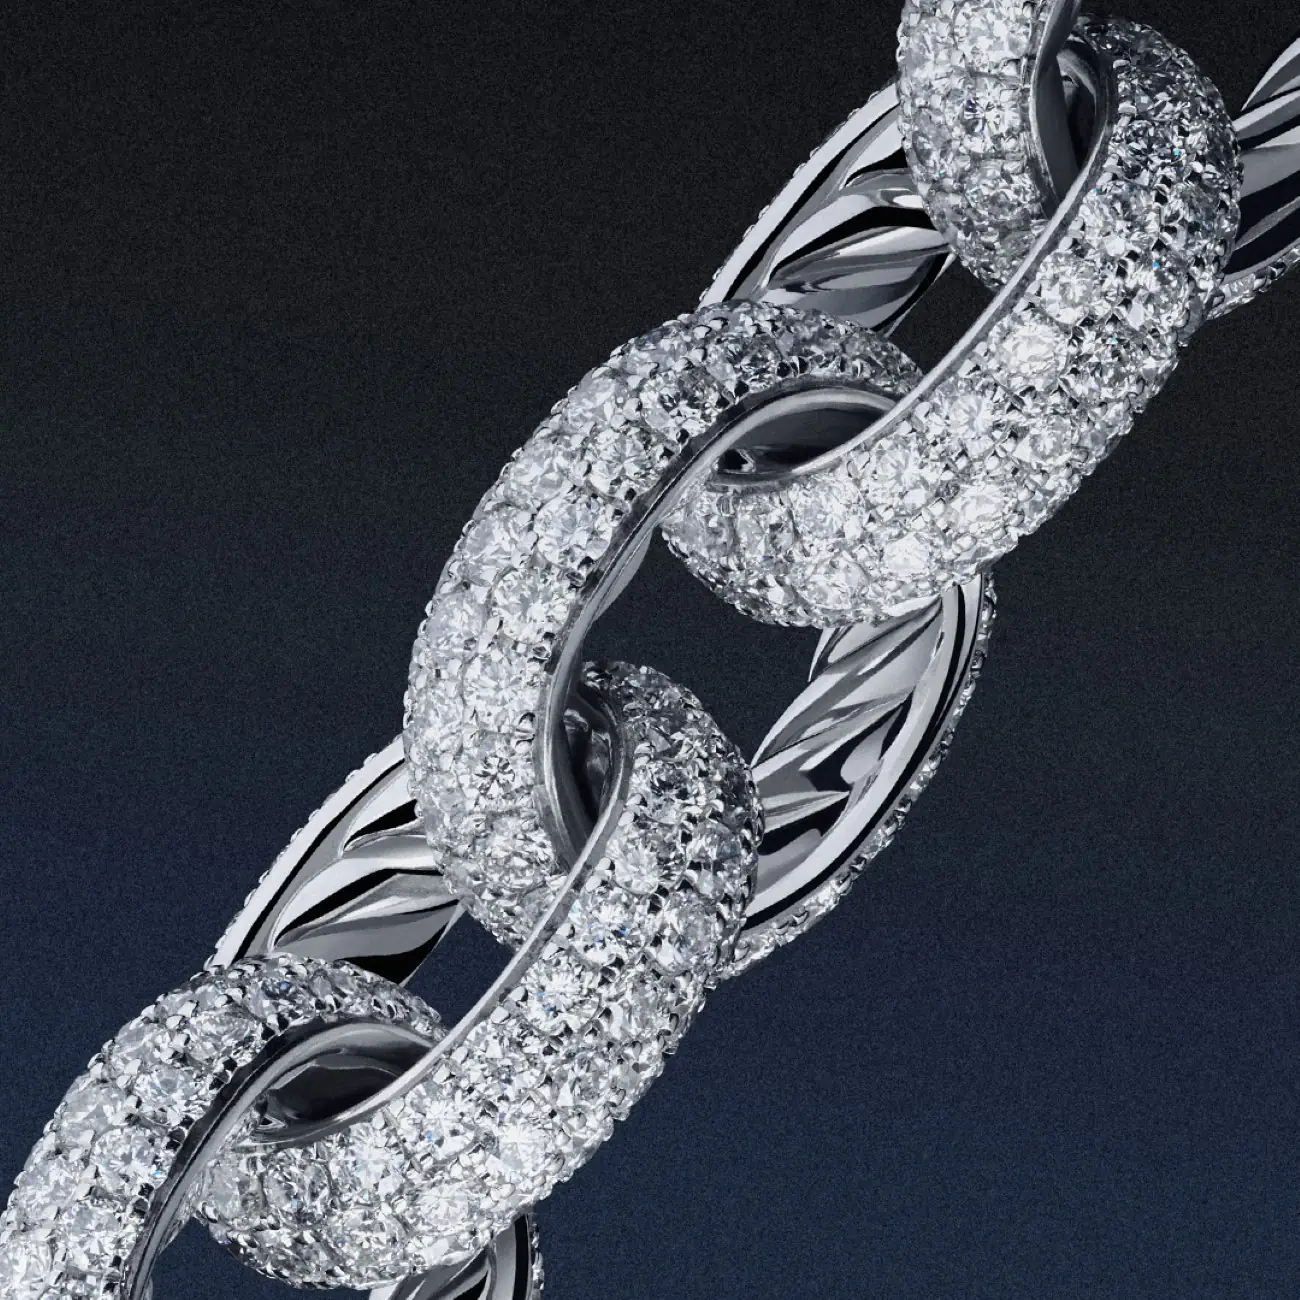 Michael B. Jordan becomes David Yurman's new global brand ambassador for its first Men's High Jewelry line